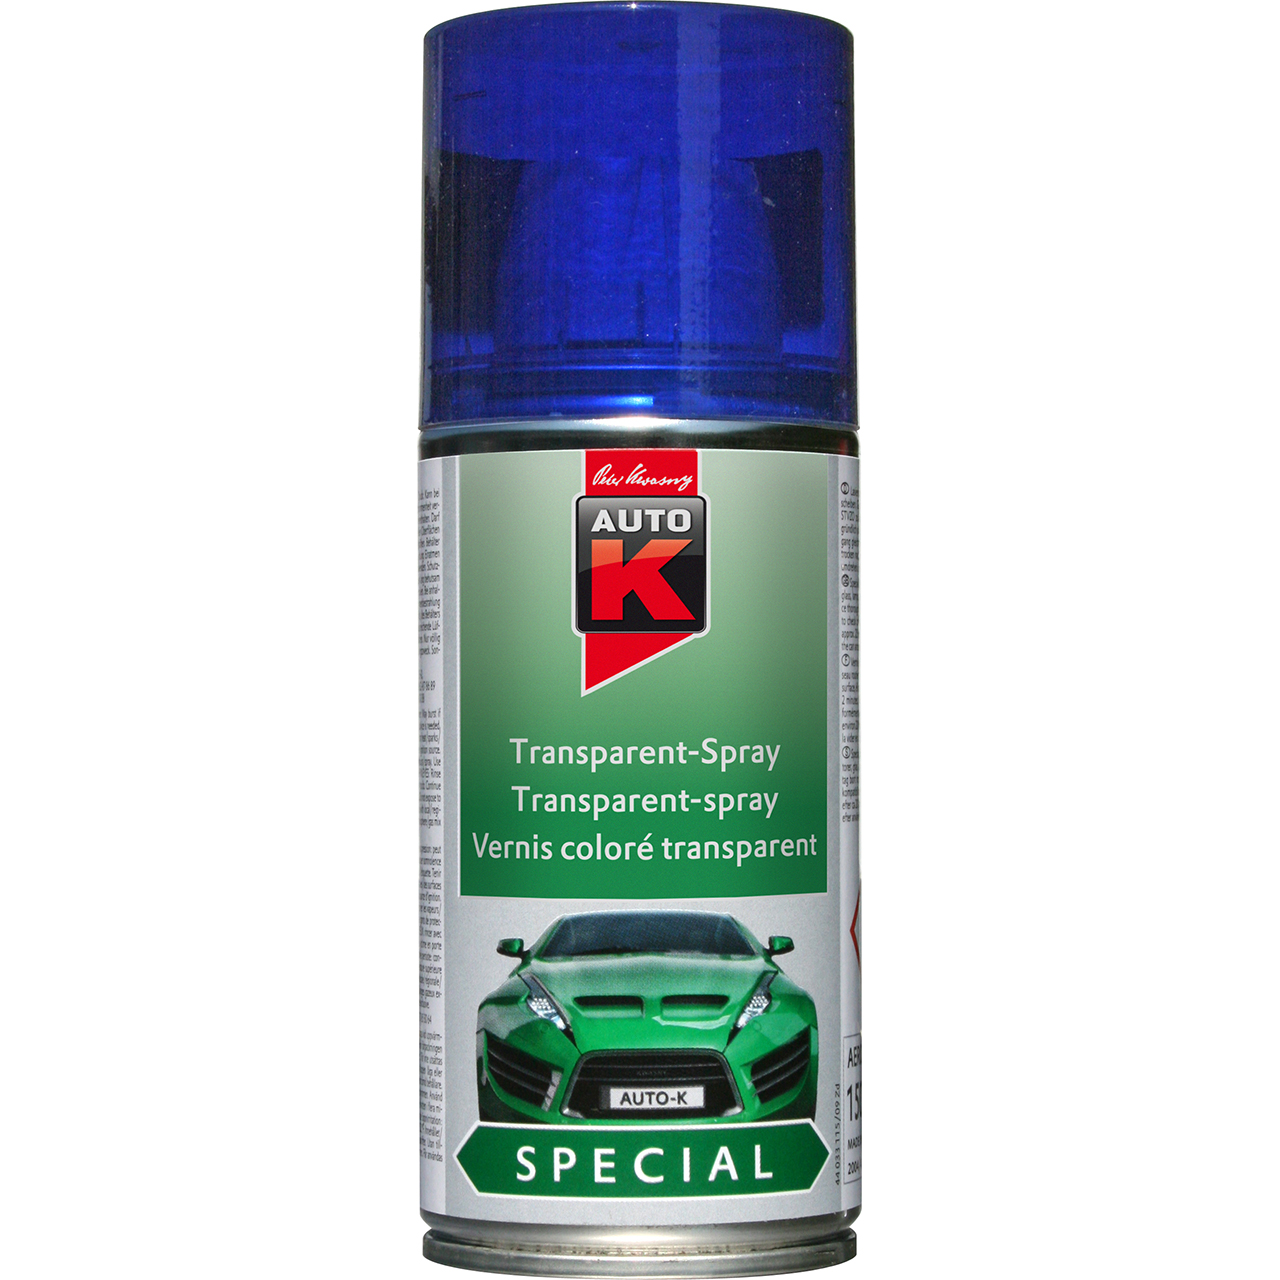 Auto-K Special Transparent-Spray blau 150ml